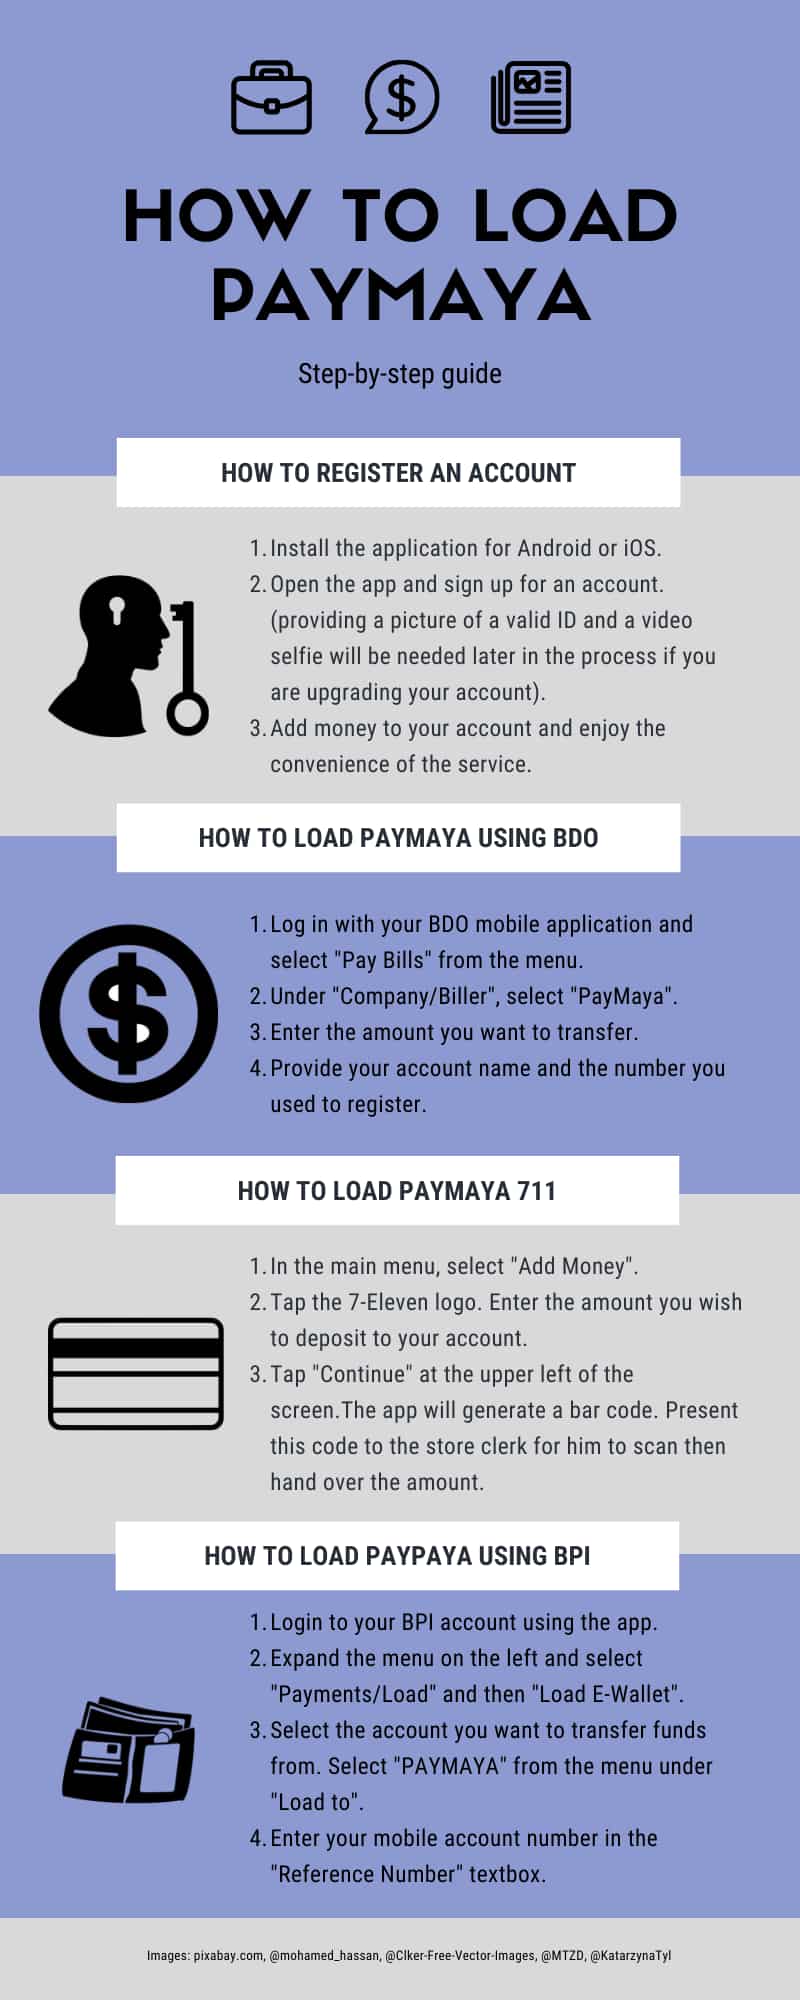 How to load PayMaya